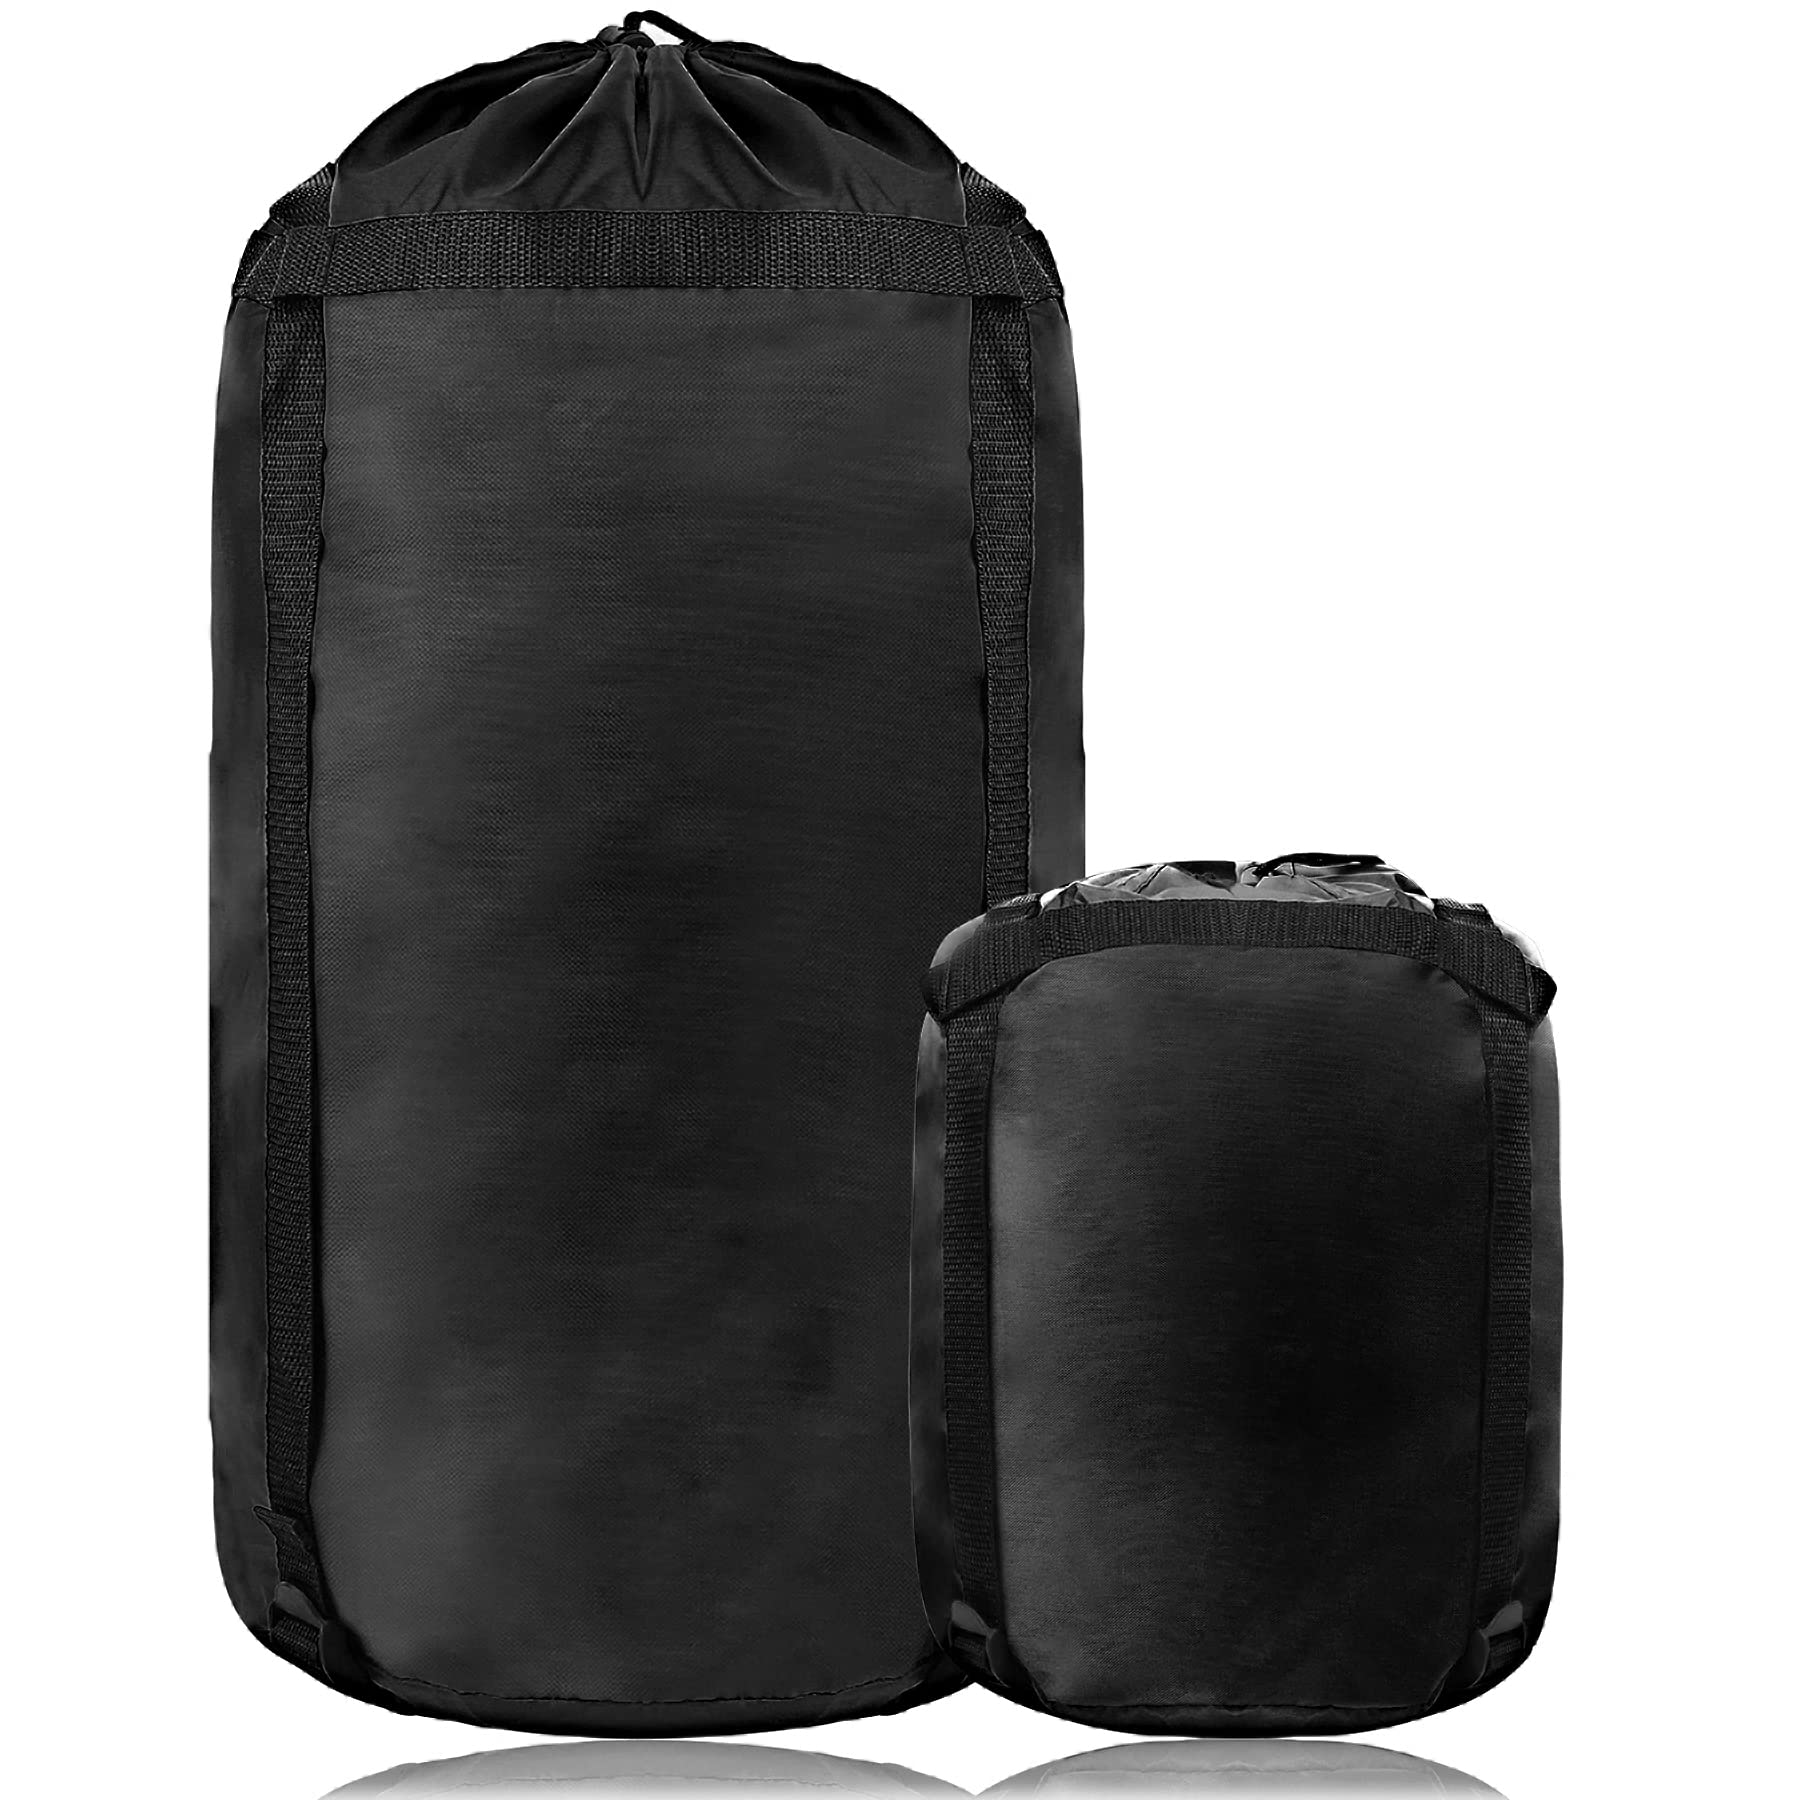 Compression Stuff Sack, 46L Lightweight Waterproof Sleeping Bags Storage  Stuff Sack, 50% More Storage for Camping, Hiking, Travelling, Backpacking  Black